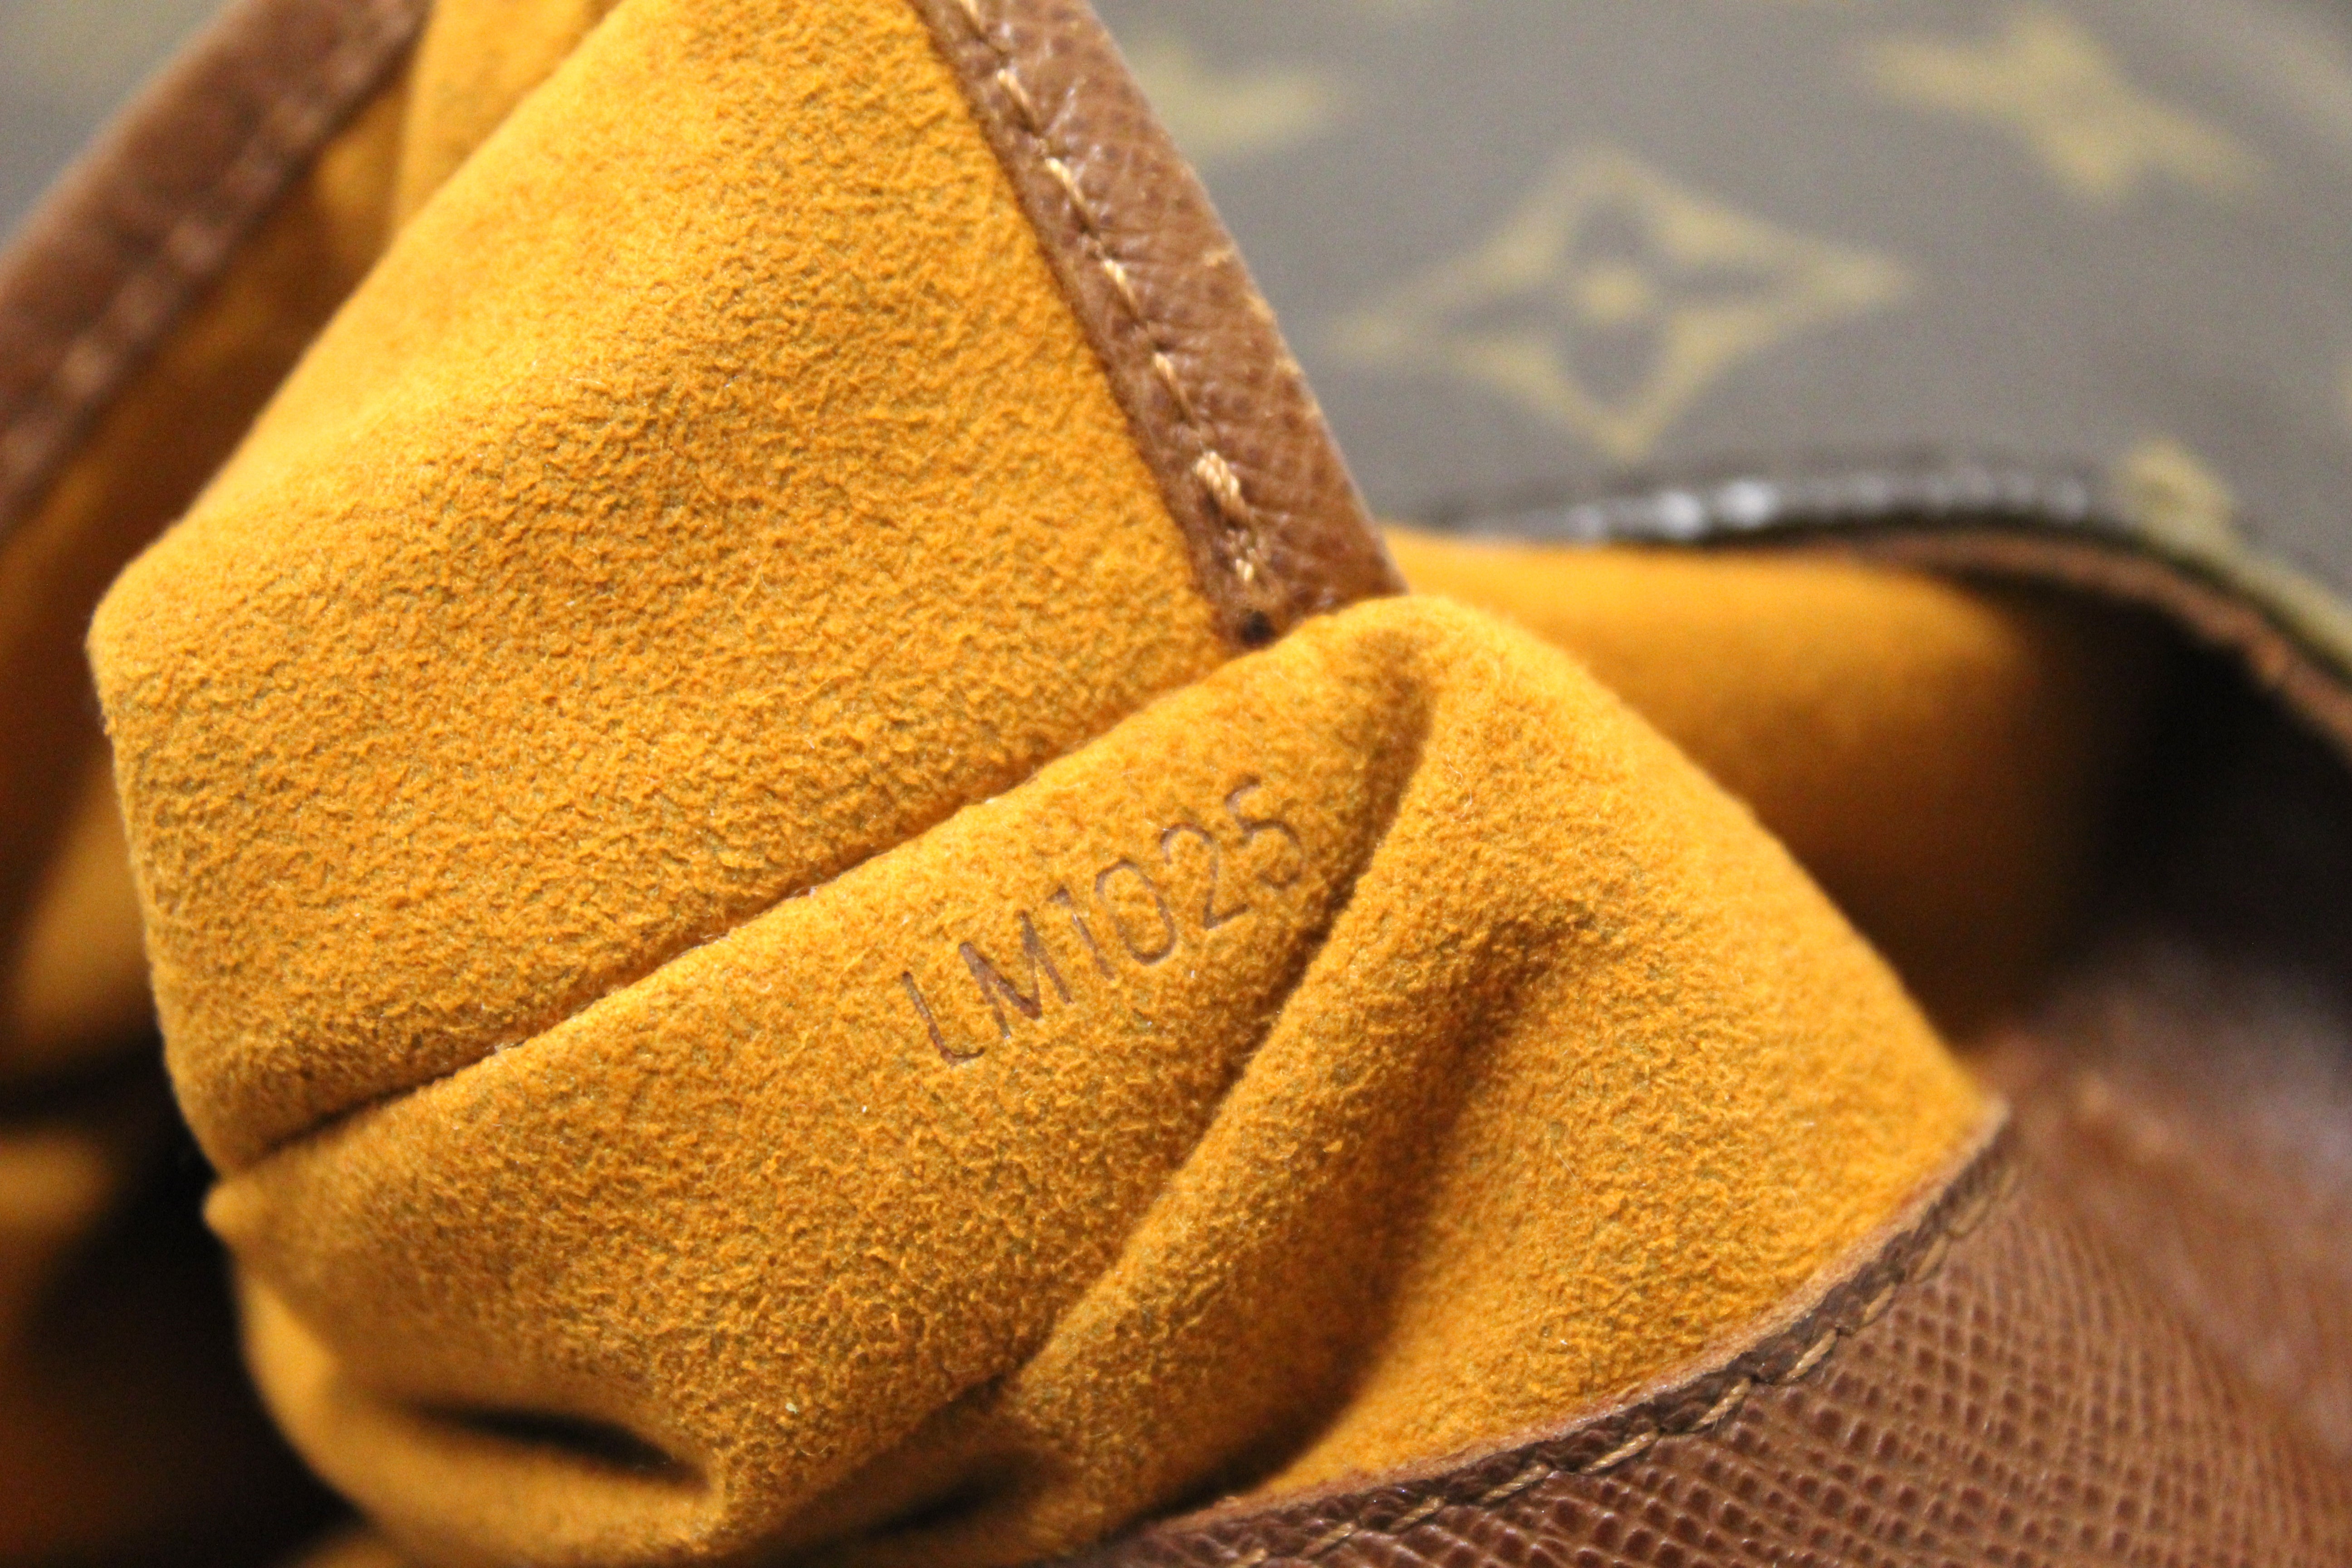 Brown Louis Vuitton Monogram Musette Salsa Long Strap Crossbody Bag, RvceShops Revival